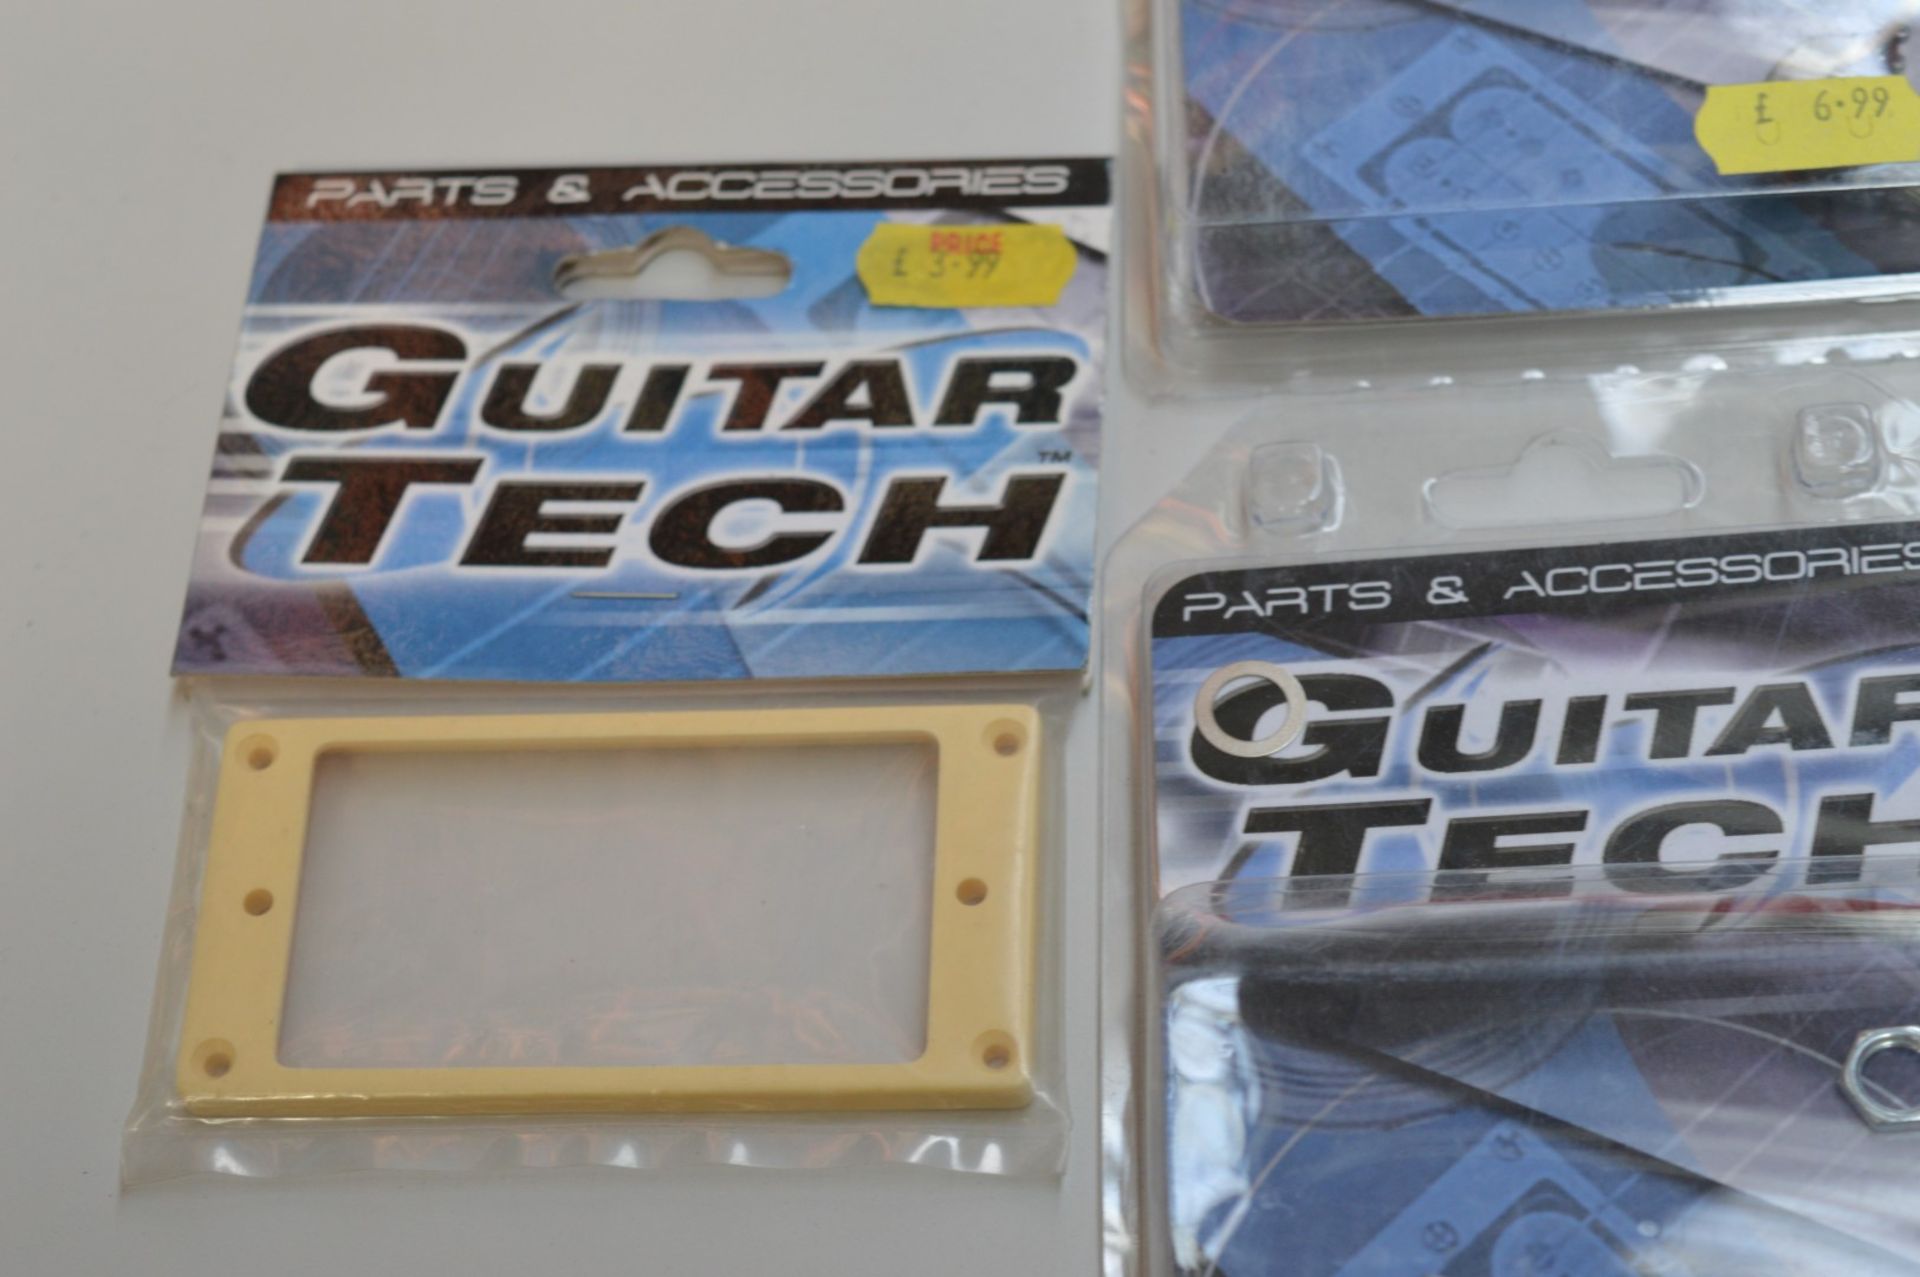 7 x Guitar Tech Accessories Including Pickguard Bracket, 500K Volume) Potentiometers, Les Paul - Image 3 of 10